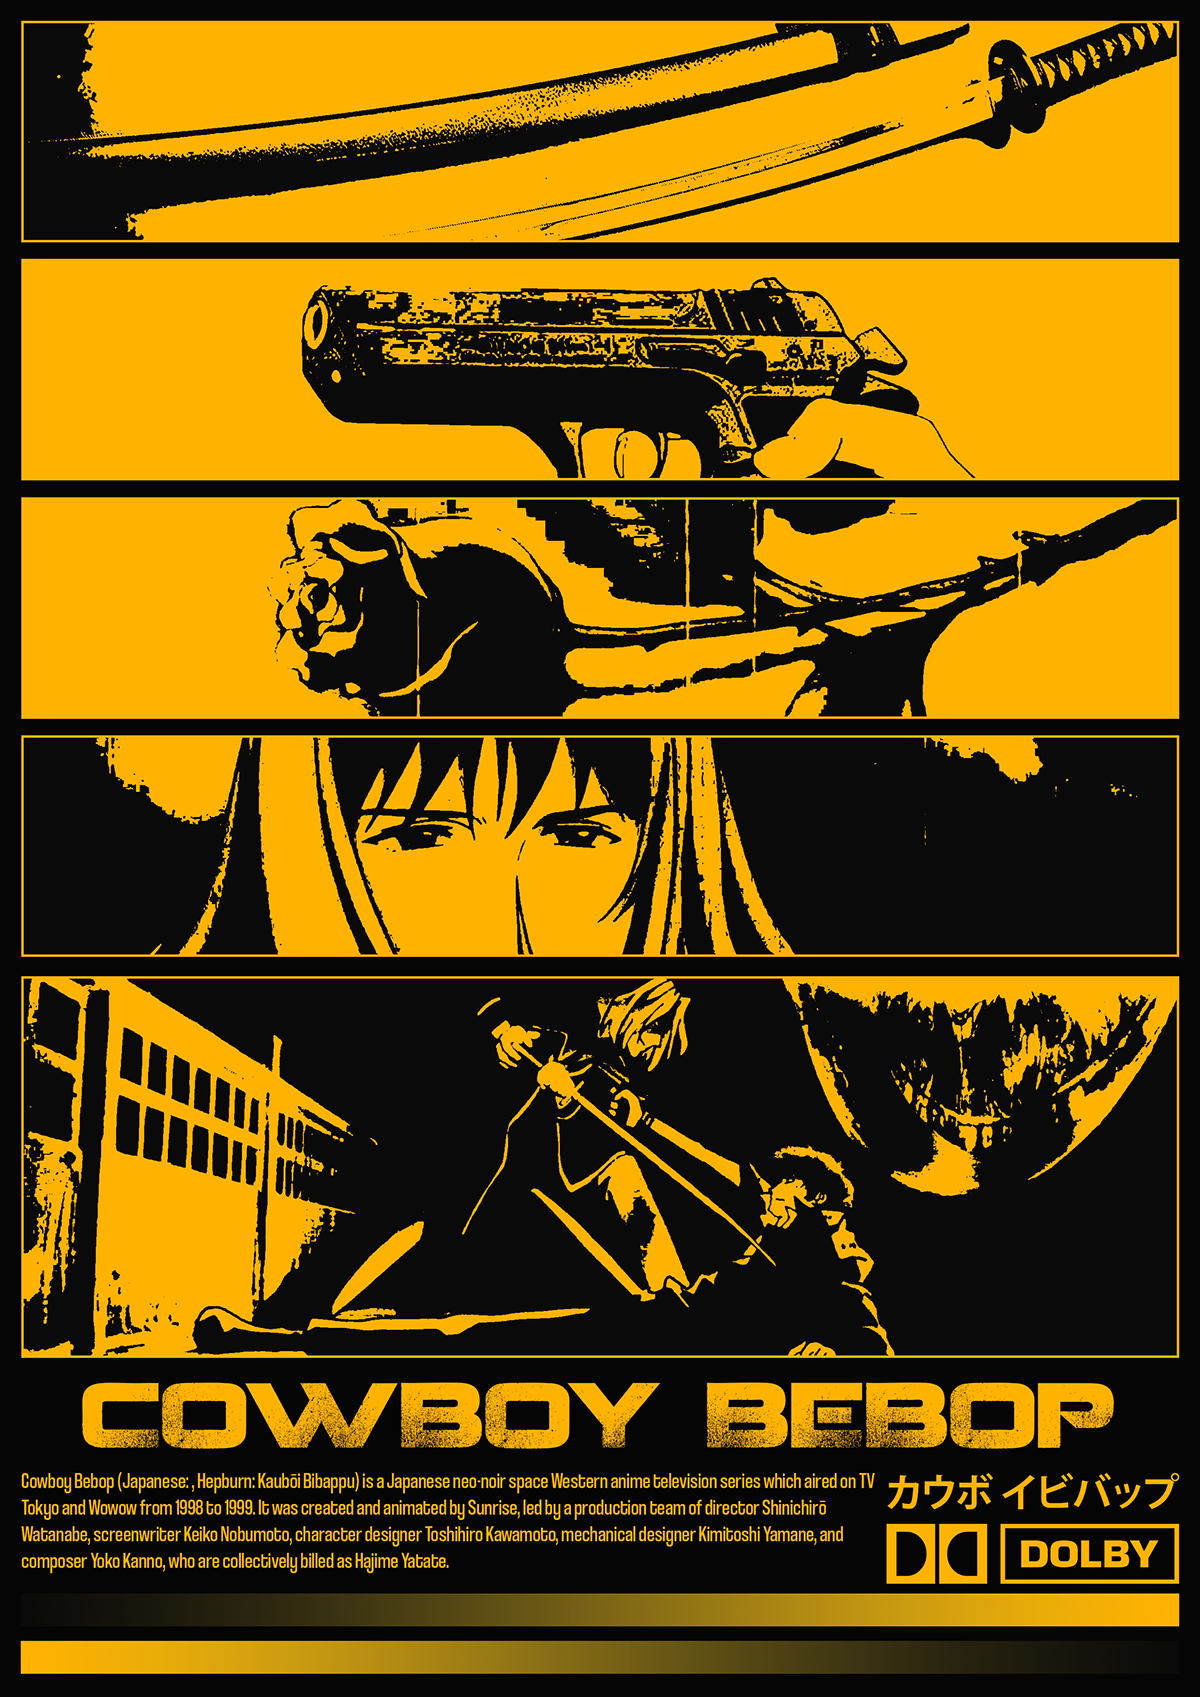 CowboyBebop anime anime art manga Character design  comic cartoon digital illustration concept art graphic design 